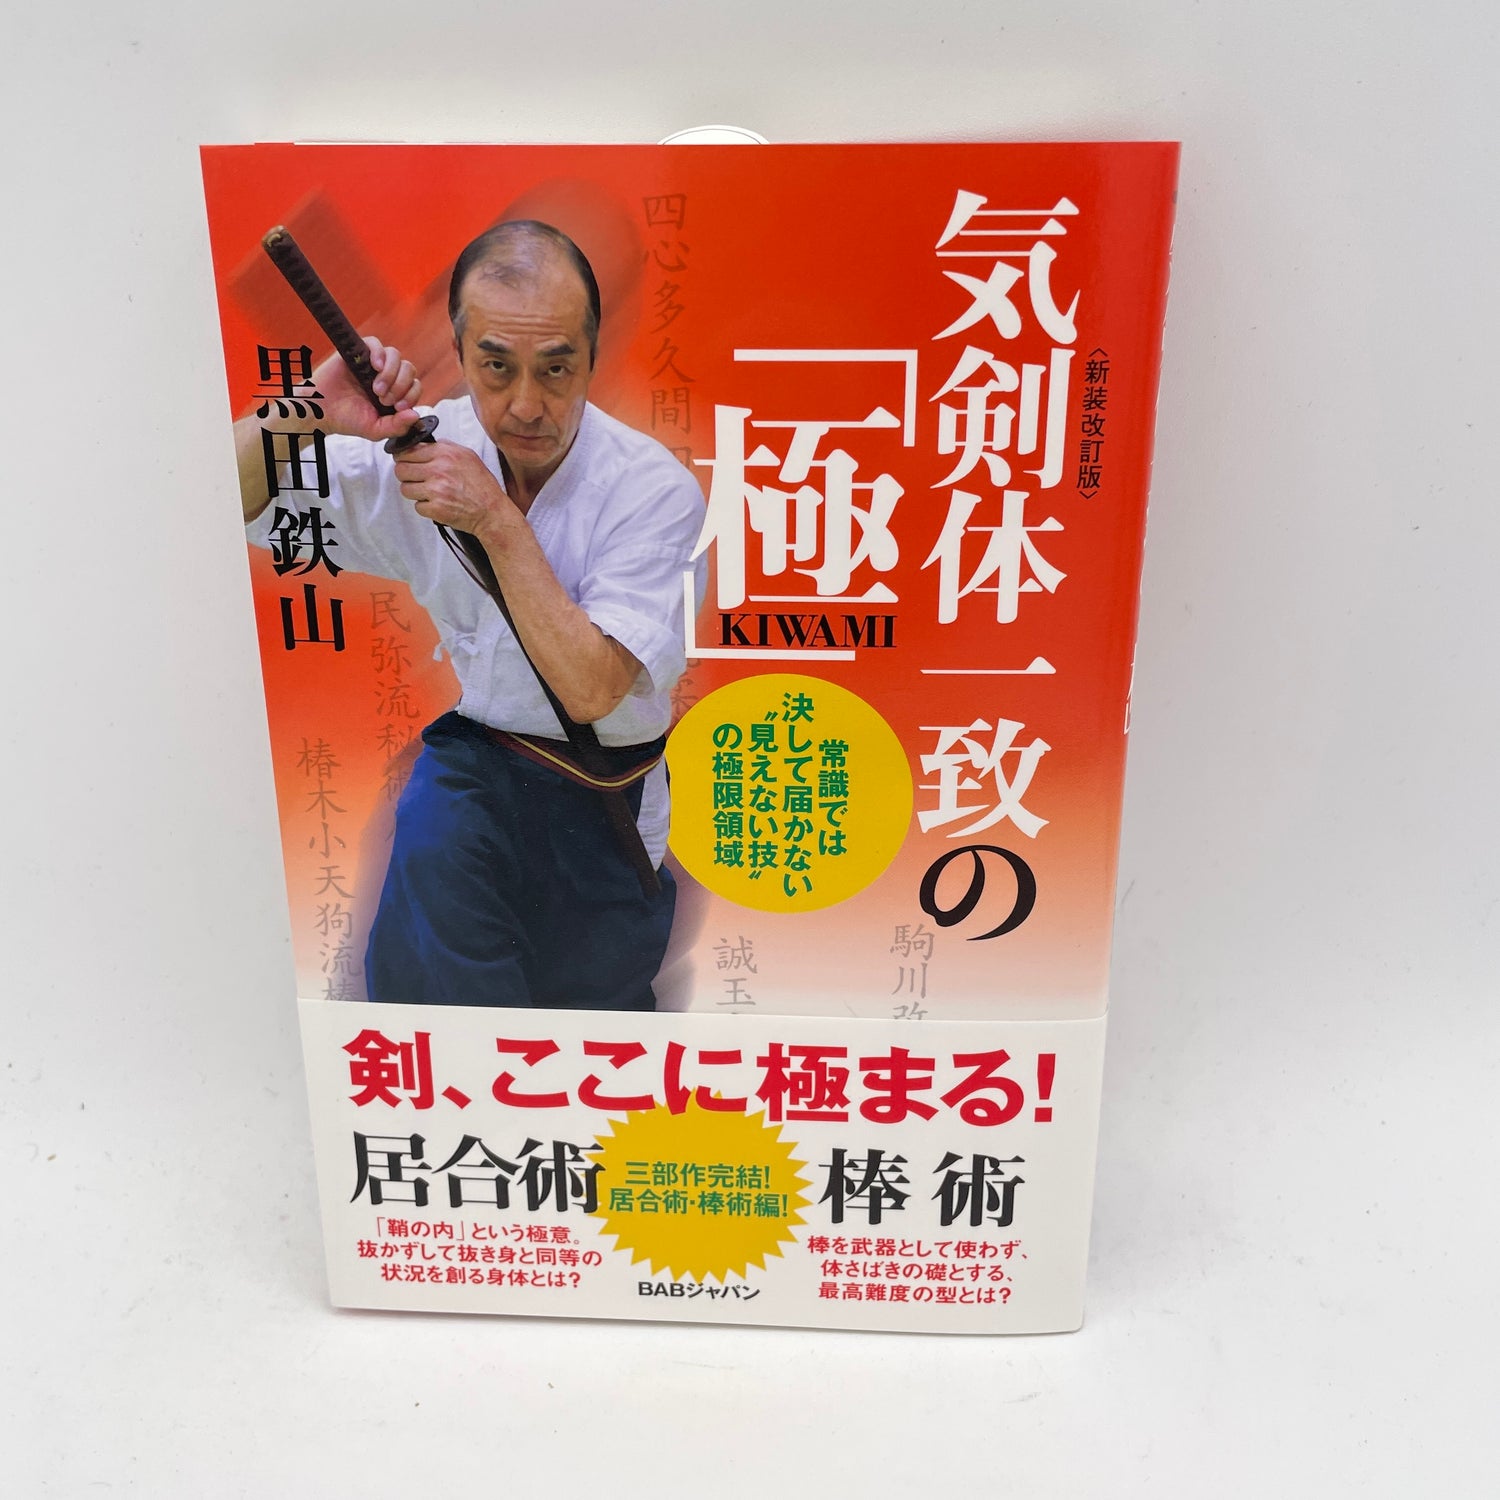 Ki Ken Tai Book 3: Kiwami by Tetsuzan Kuroda (2nd Edition)